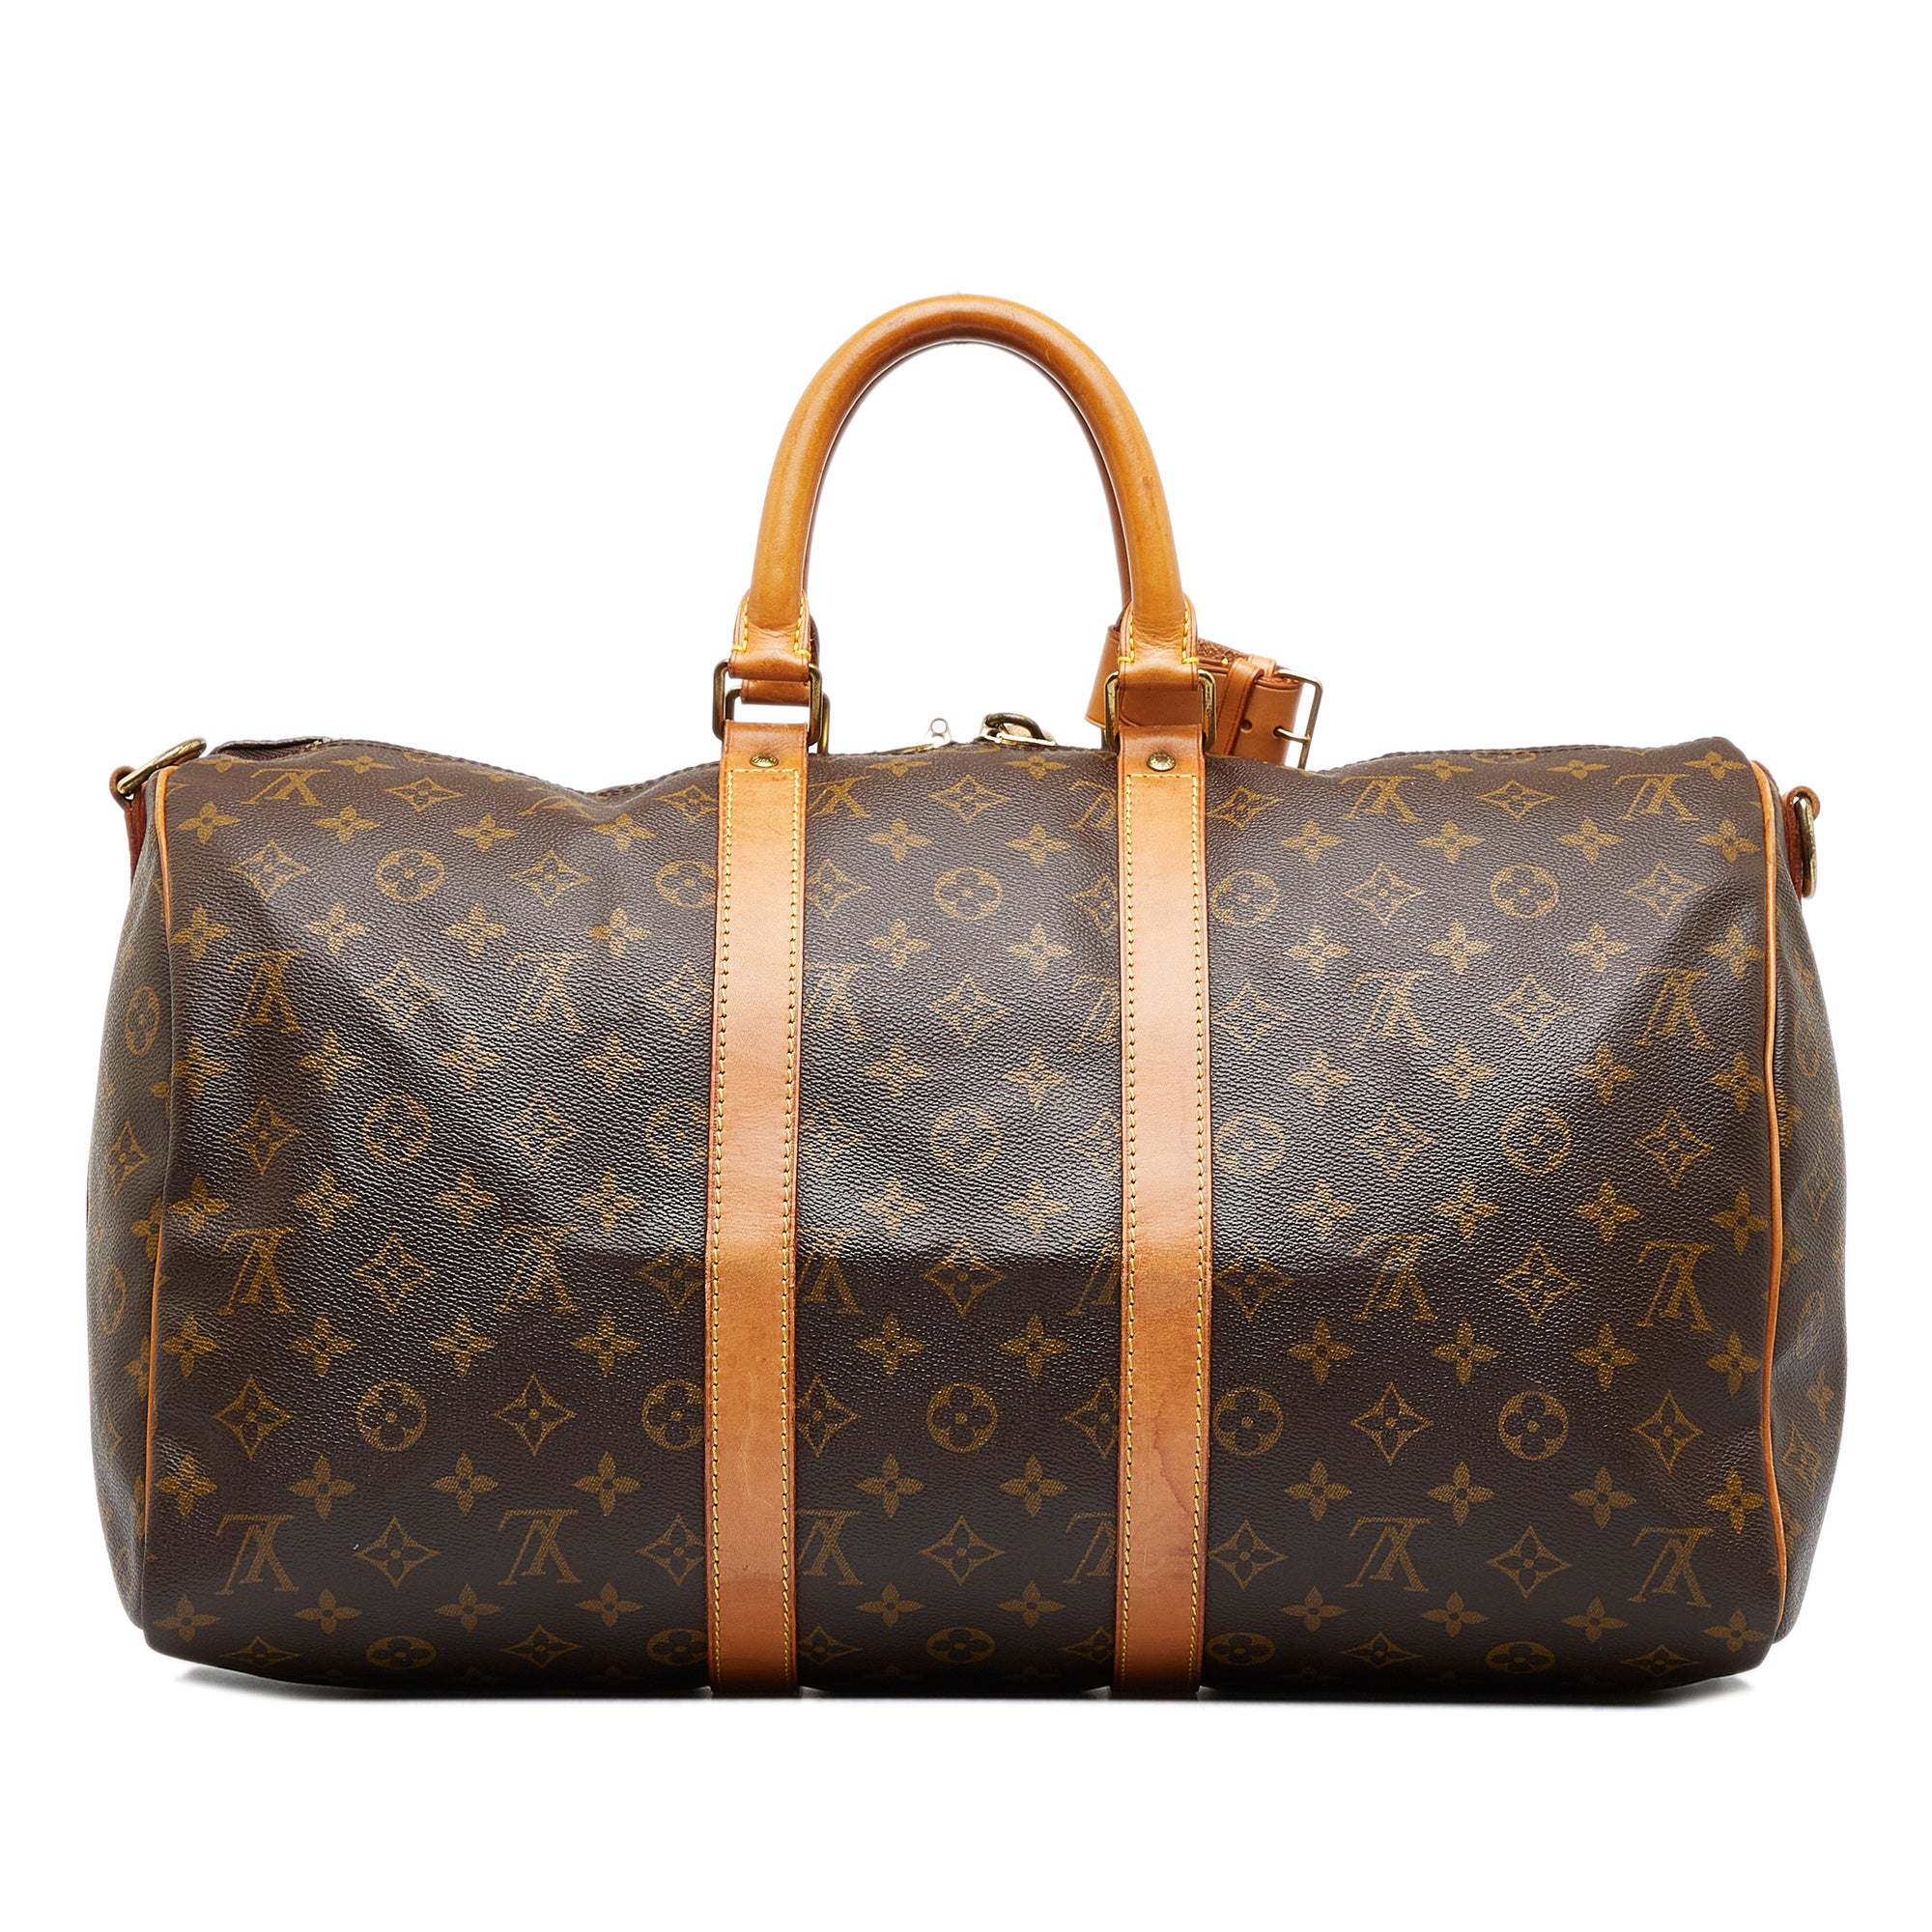 New in box Louis Vuitton Boston Keepall Bandouliere 45 Duffle Bag